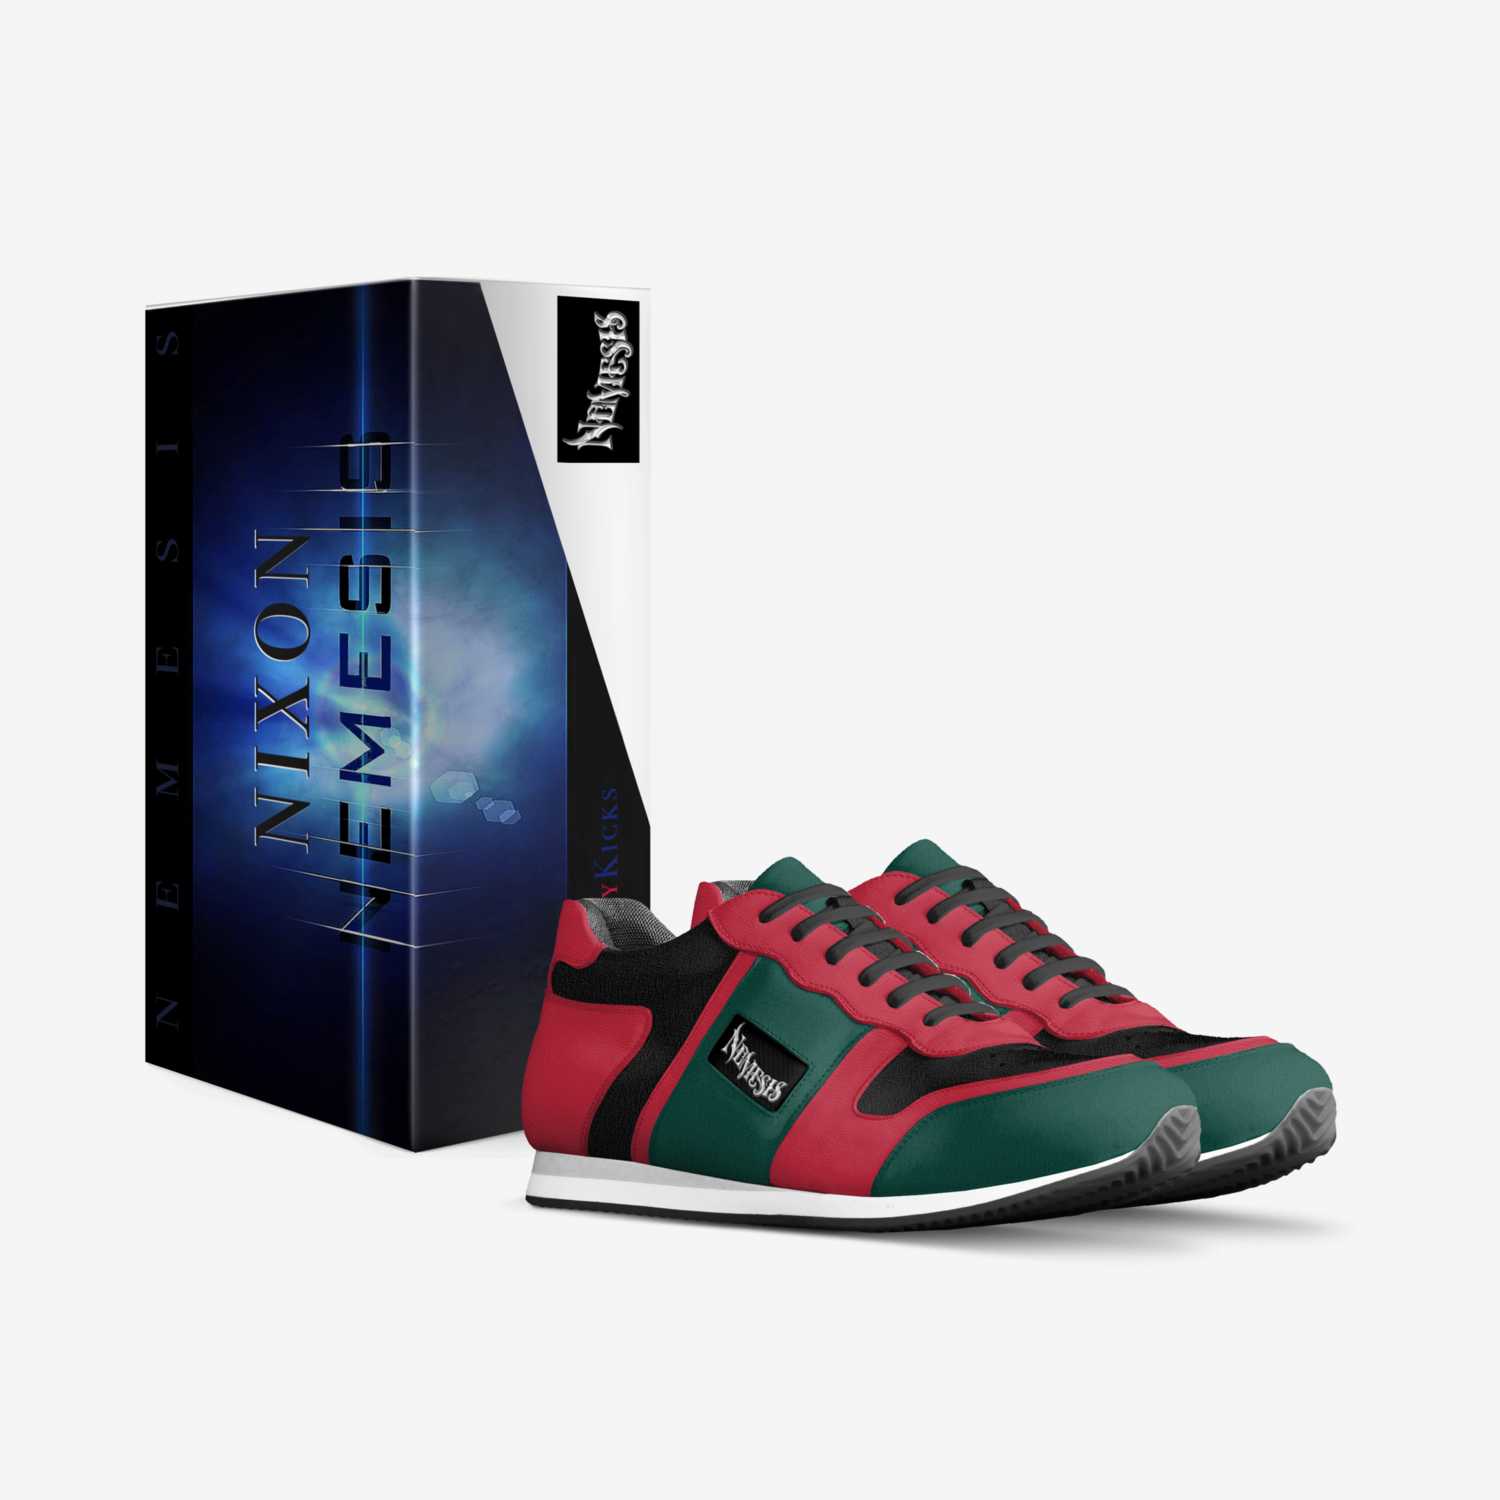 nixon Nemesis custom made in Italy shoes by Ray Kolinski | Box view